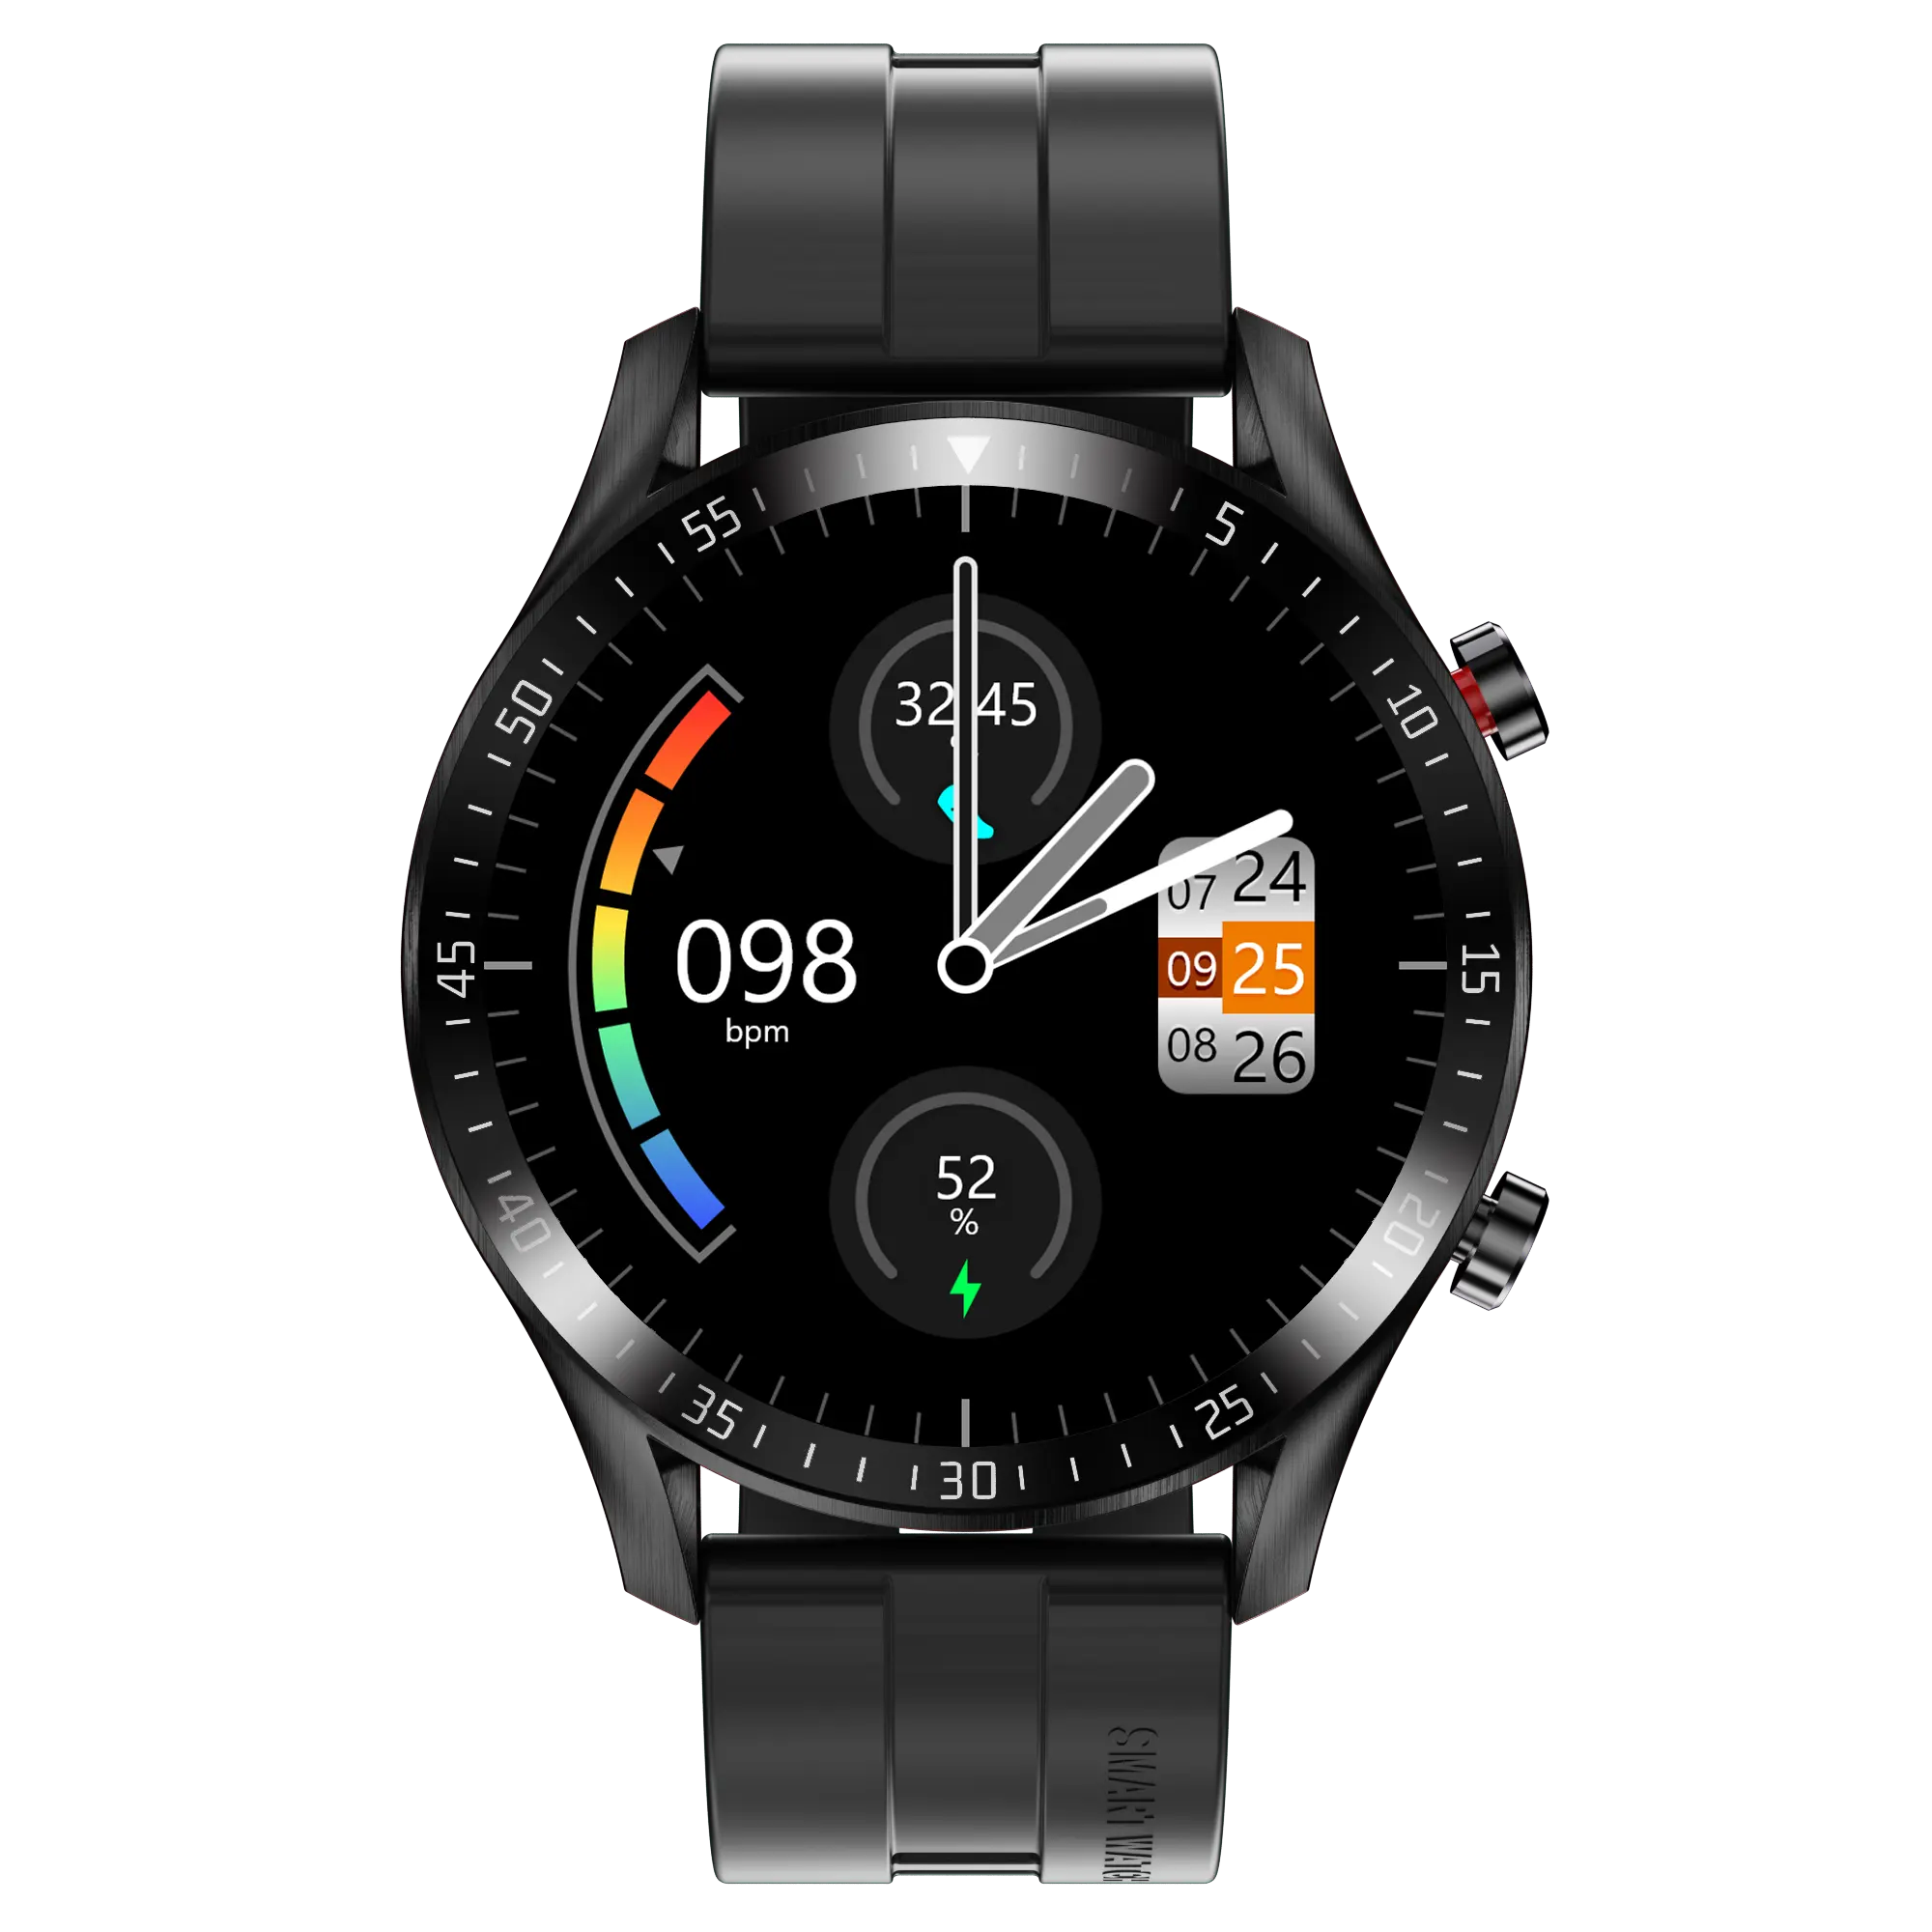 Dial Bt Oproep Smart Wearable Apparaten Voor Android Ios ZM08 Goed Uitziende Smart Horloge Sport Fitness Tracker Reloj Inteligente